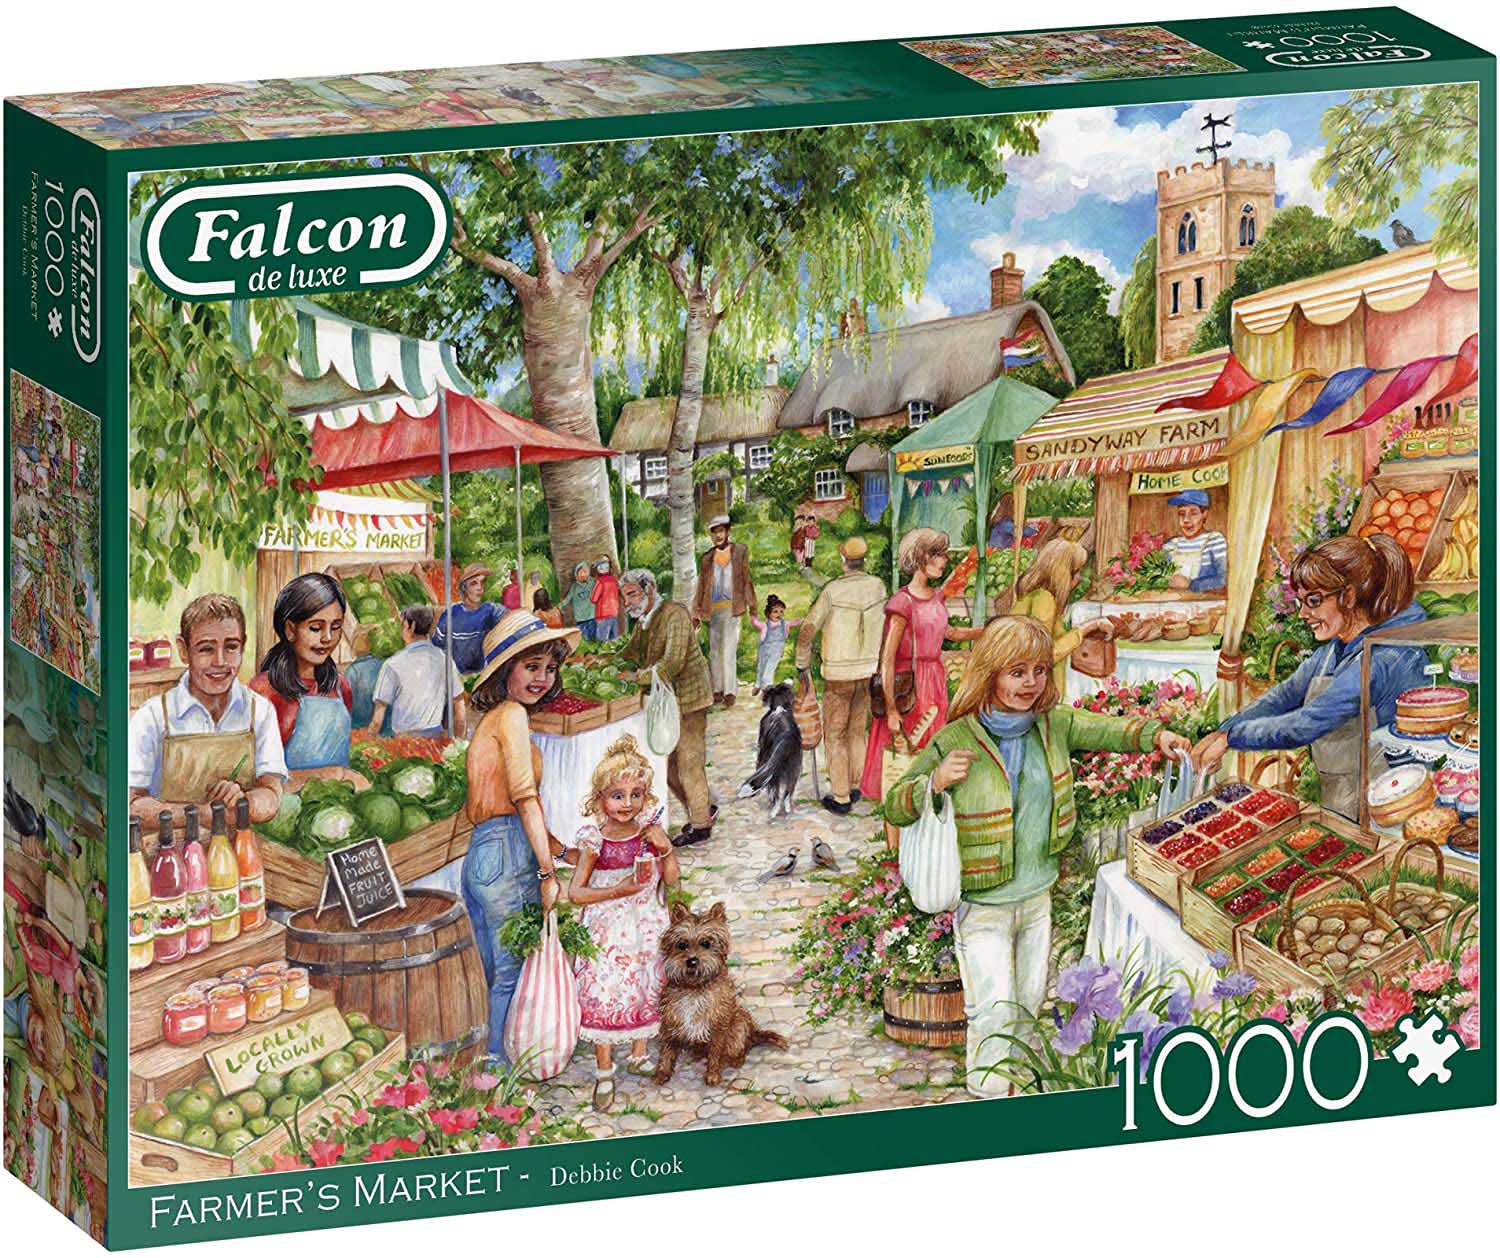 THE VILLAGE SHOW FETE Farmer Market 1000 Piece Falcon deluxe Jigsaw Puzzle 11302 